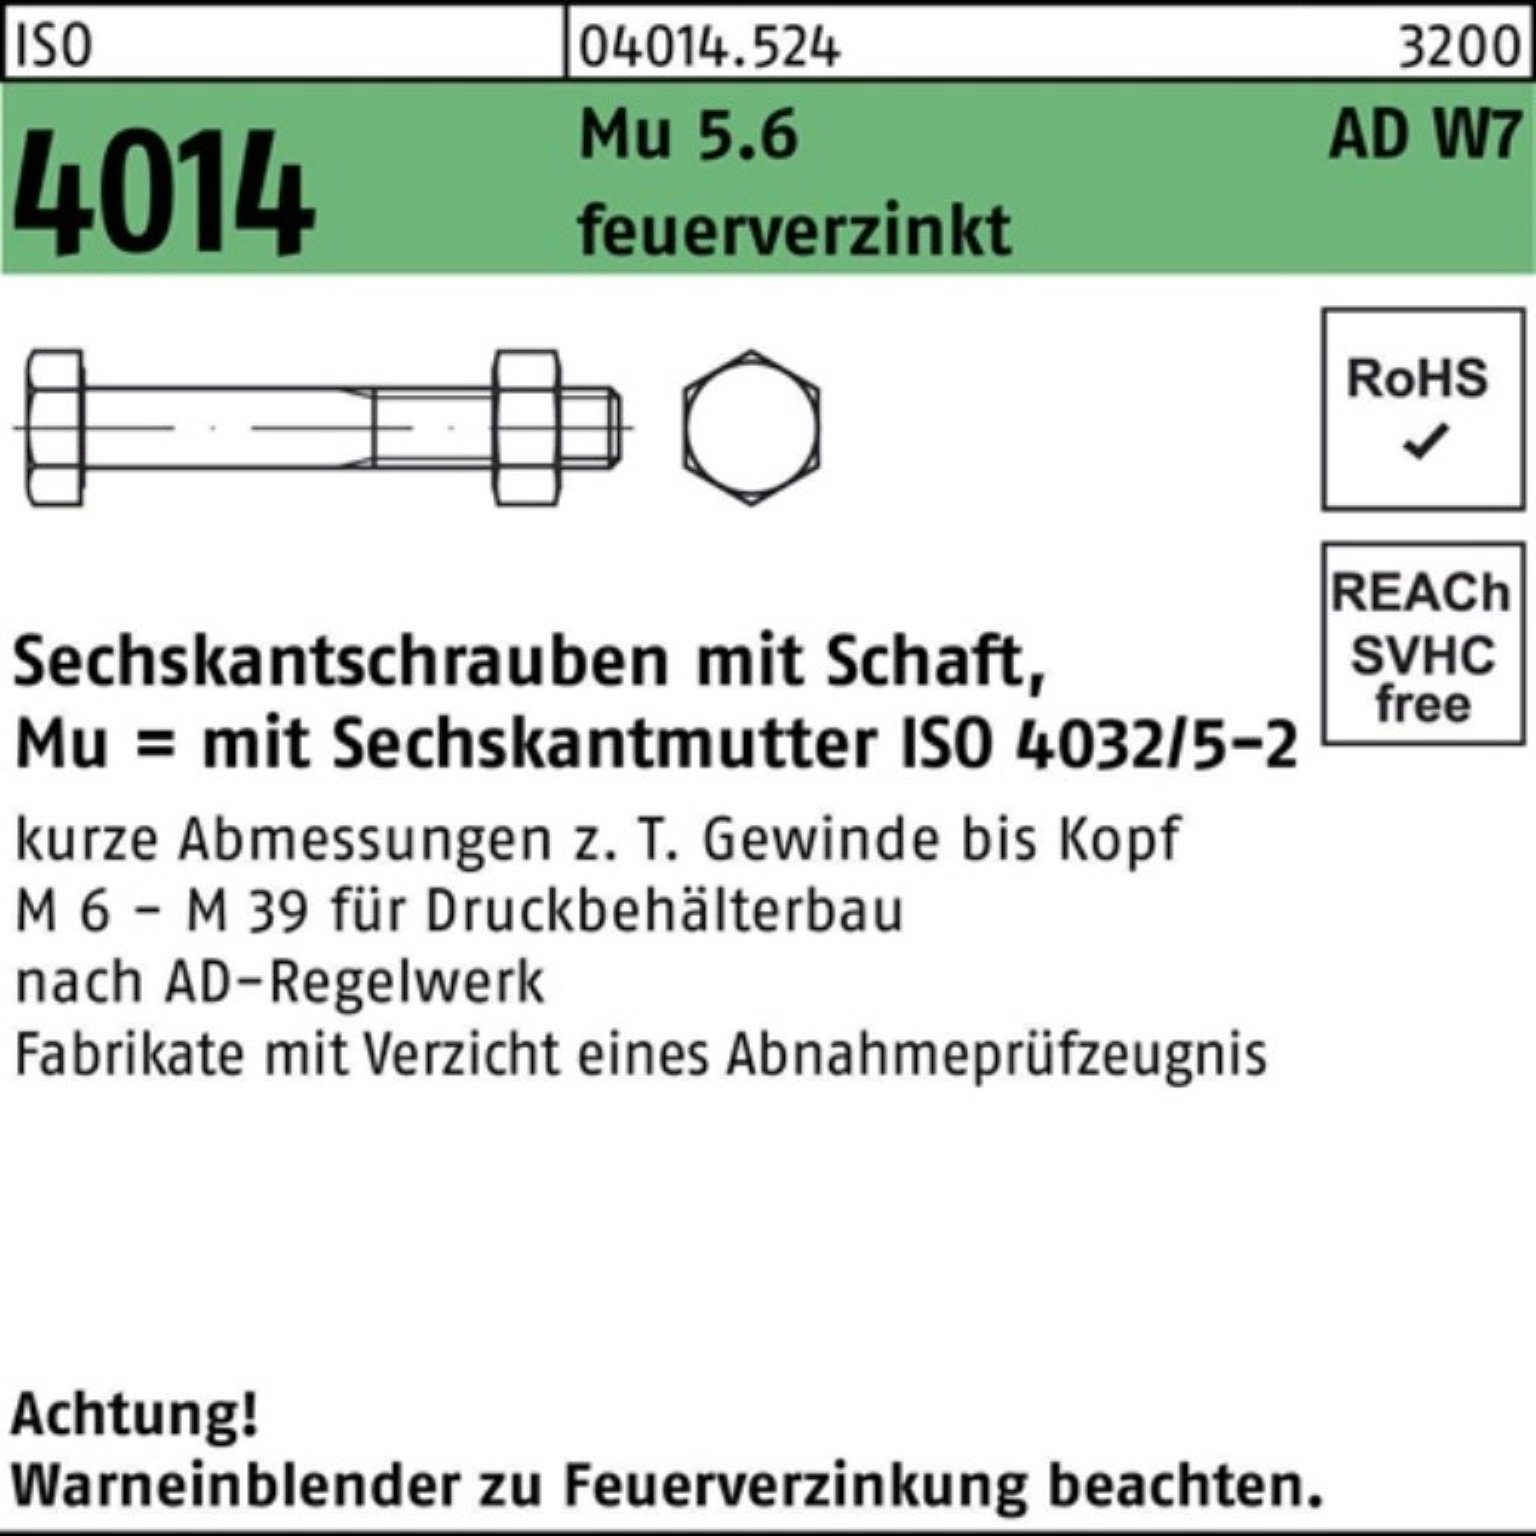 Bufab Sechskantschraube 100er Pack 5.6 feuerv M16x ISO Sechskantschraube 4014 Mu W7 150 Schaft